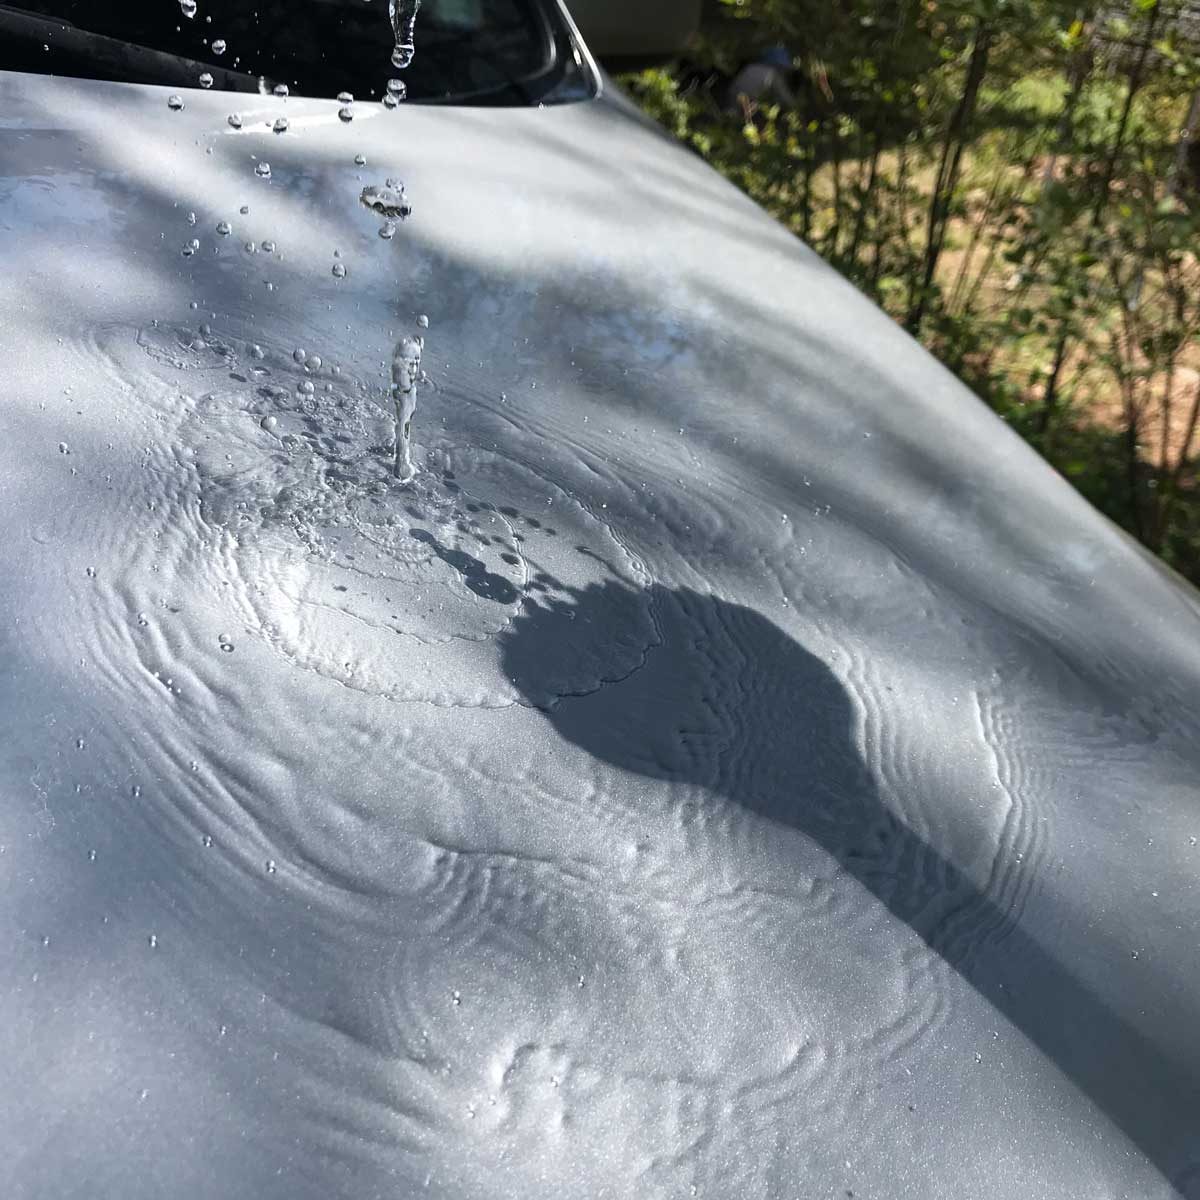 Water flowing on car